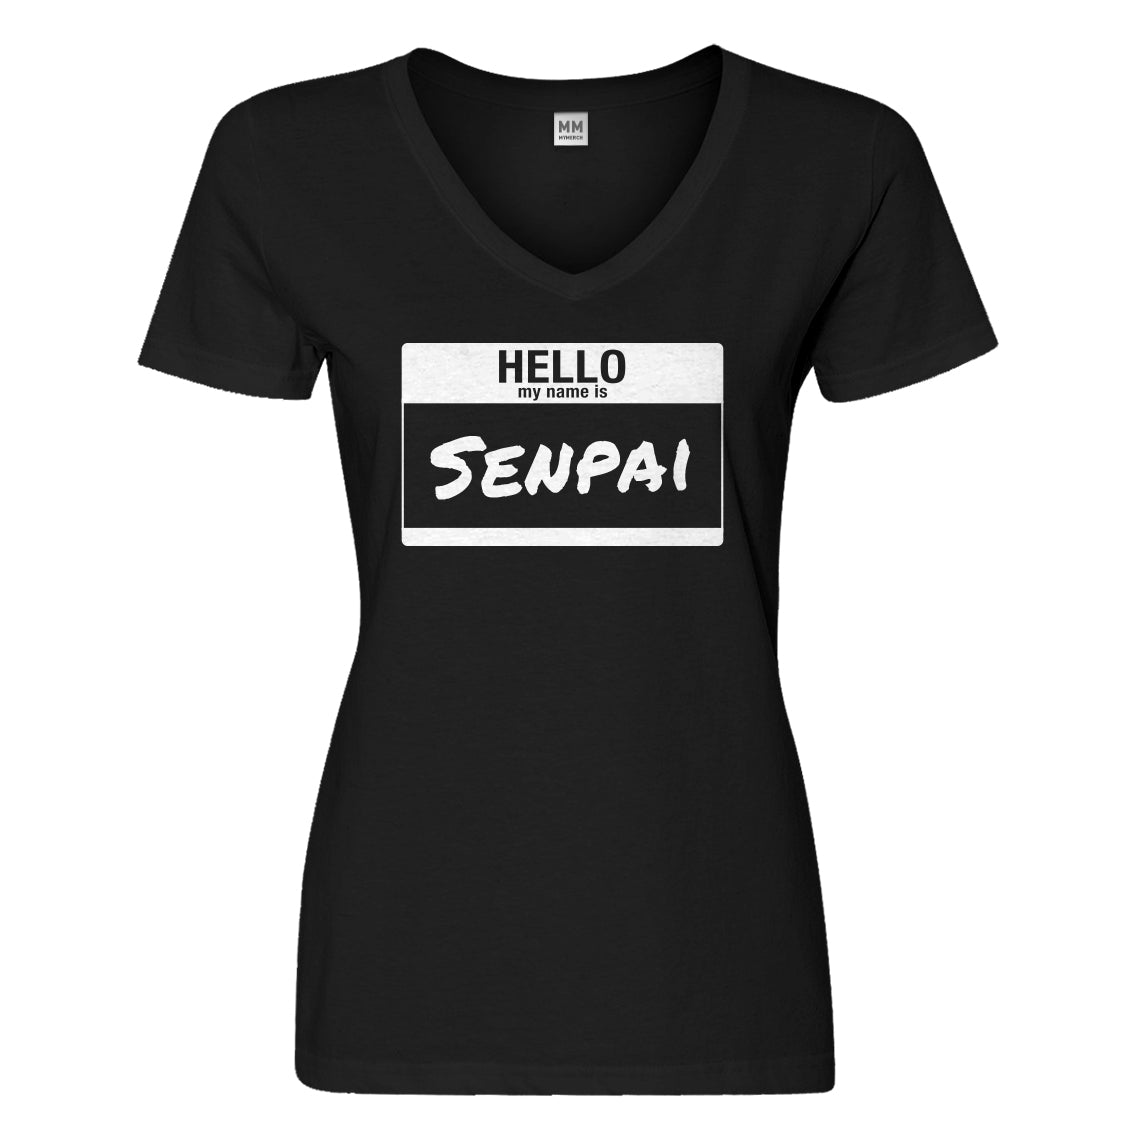 Womens Hello My Name is Senpai Vneck T-shirt